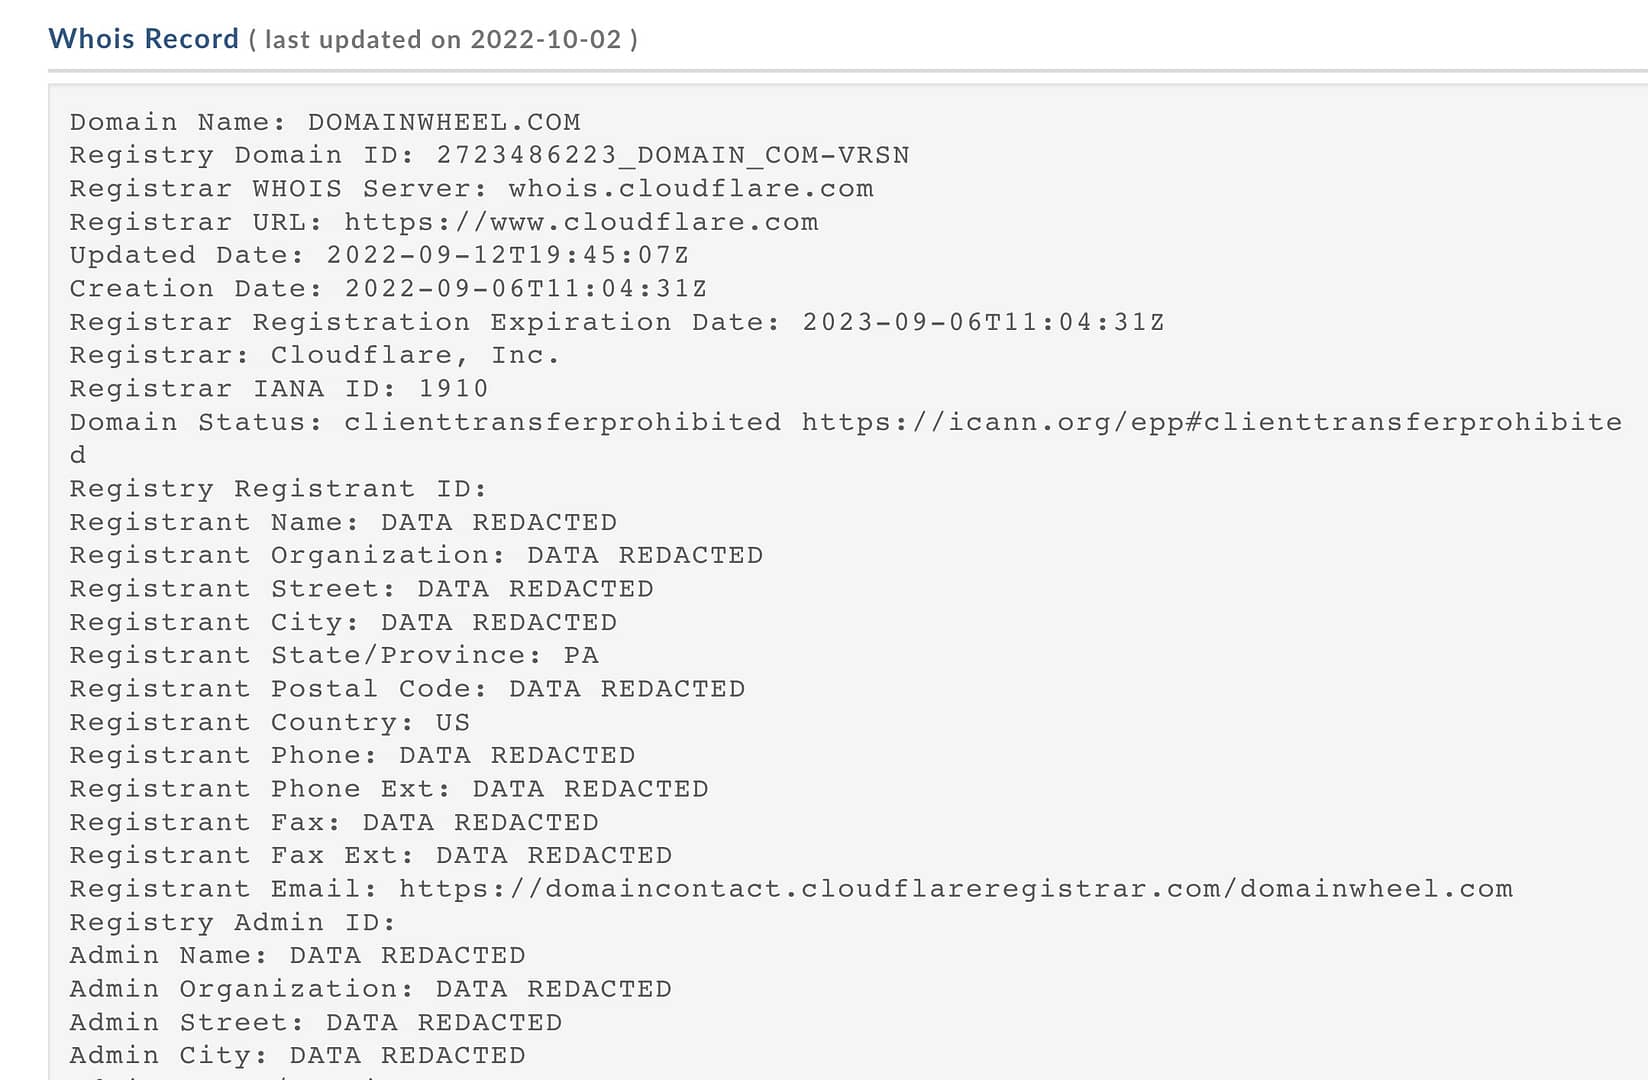 Cloudflare Registrar redacted information